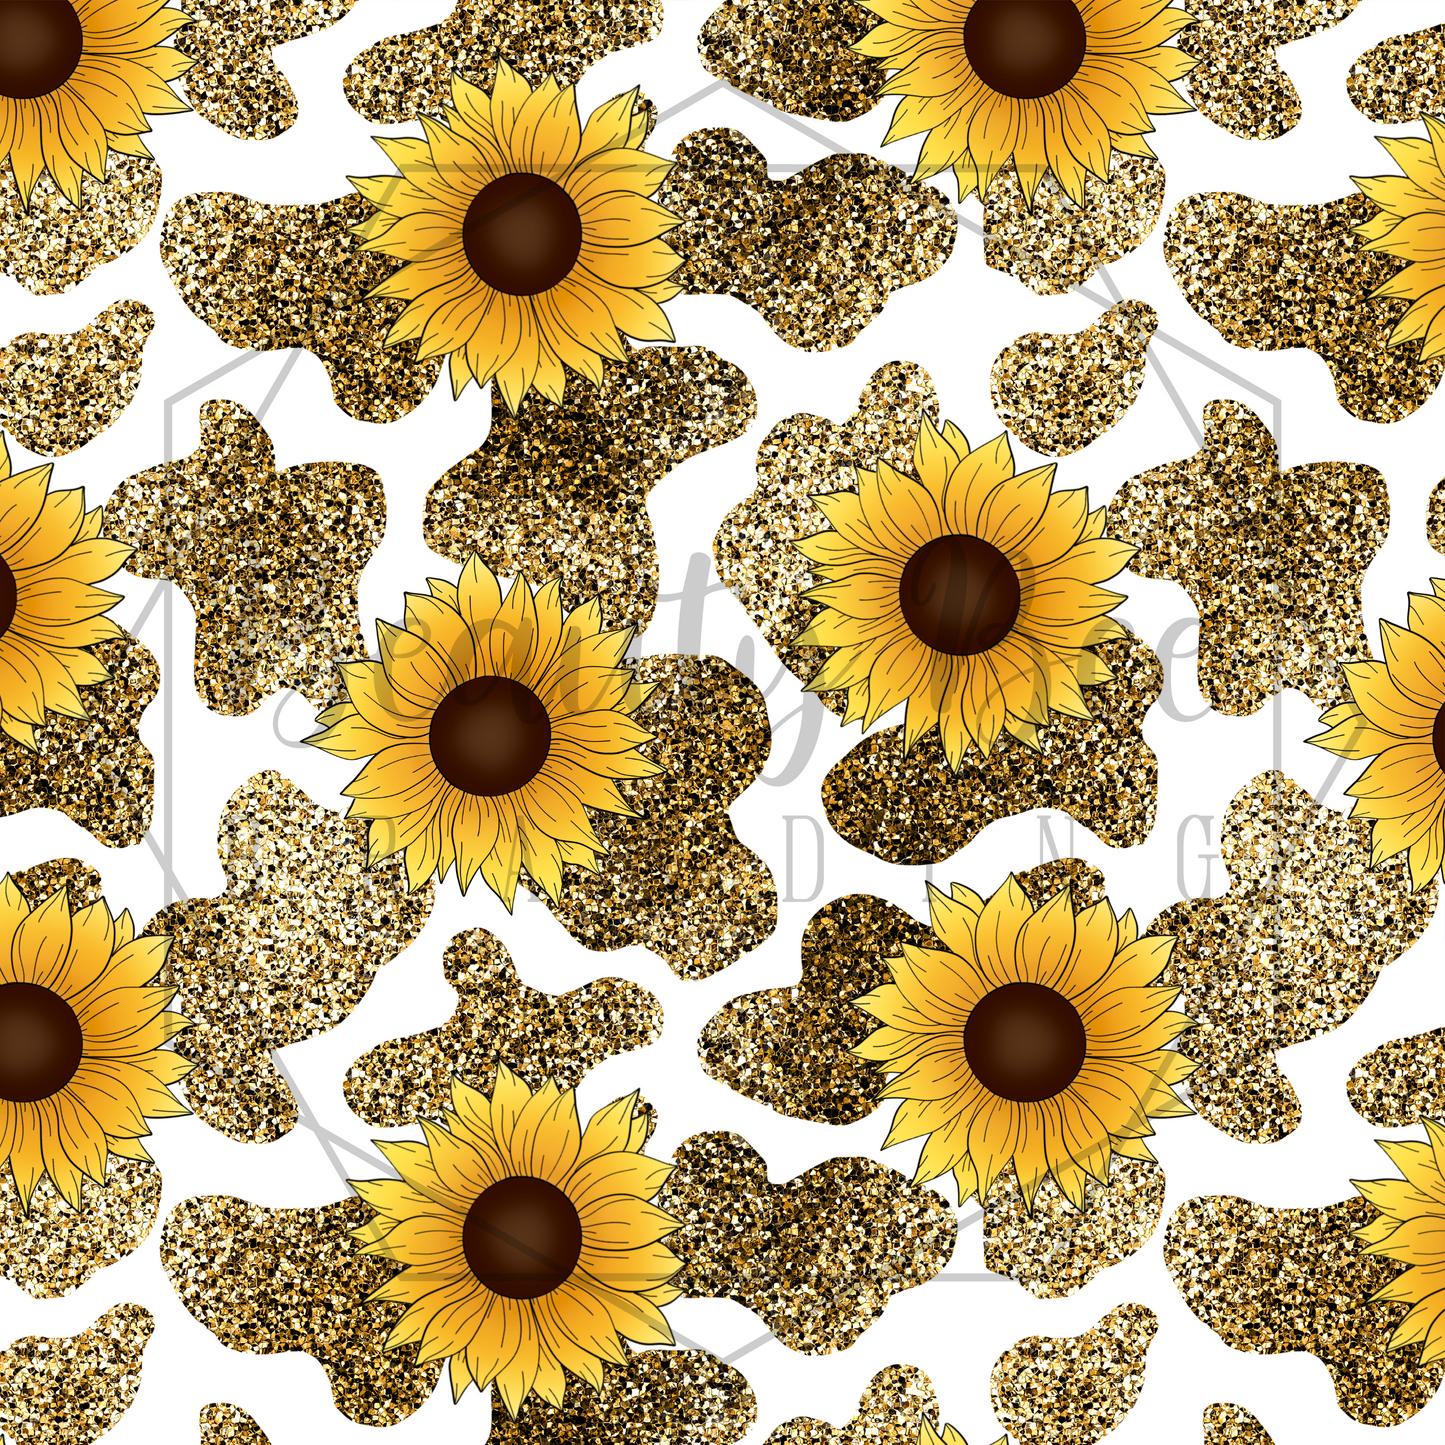 Cow Glitter Gold Spots & Sunflowers SEAMLESS PATTERN